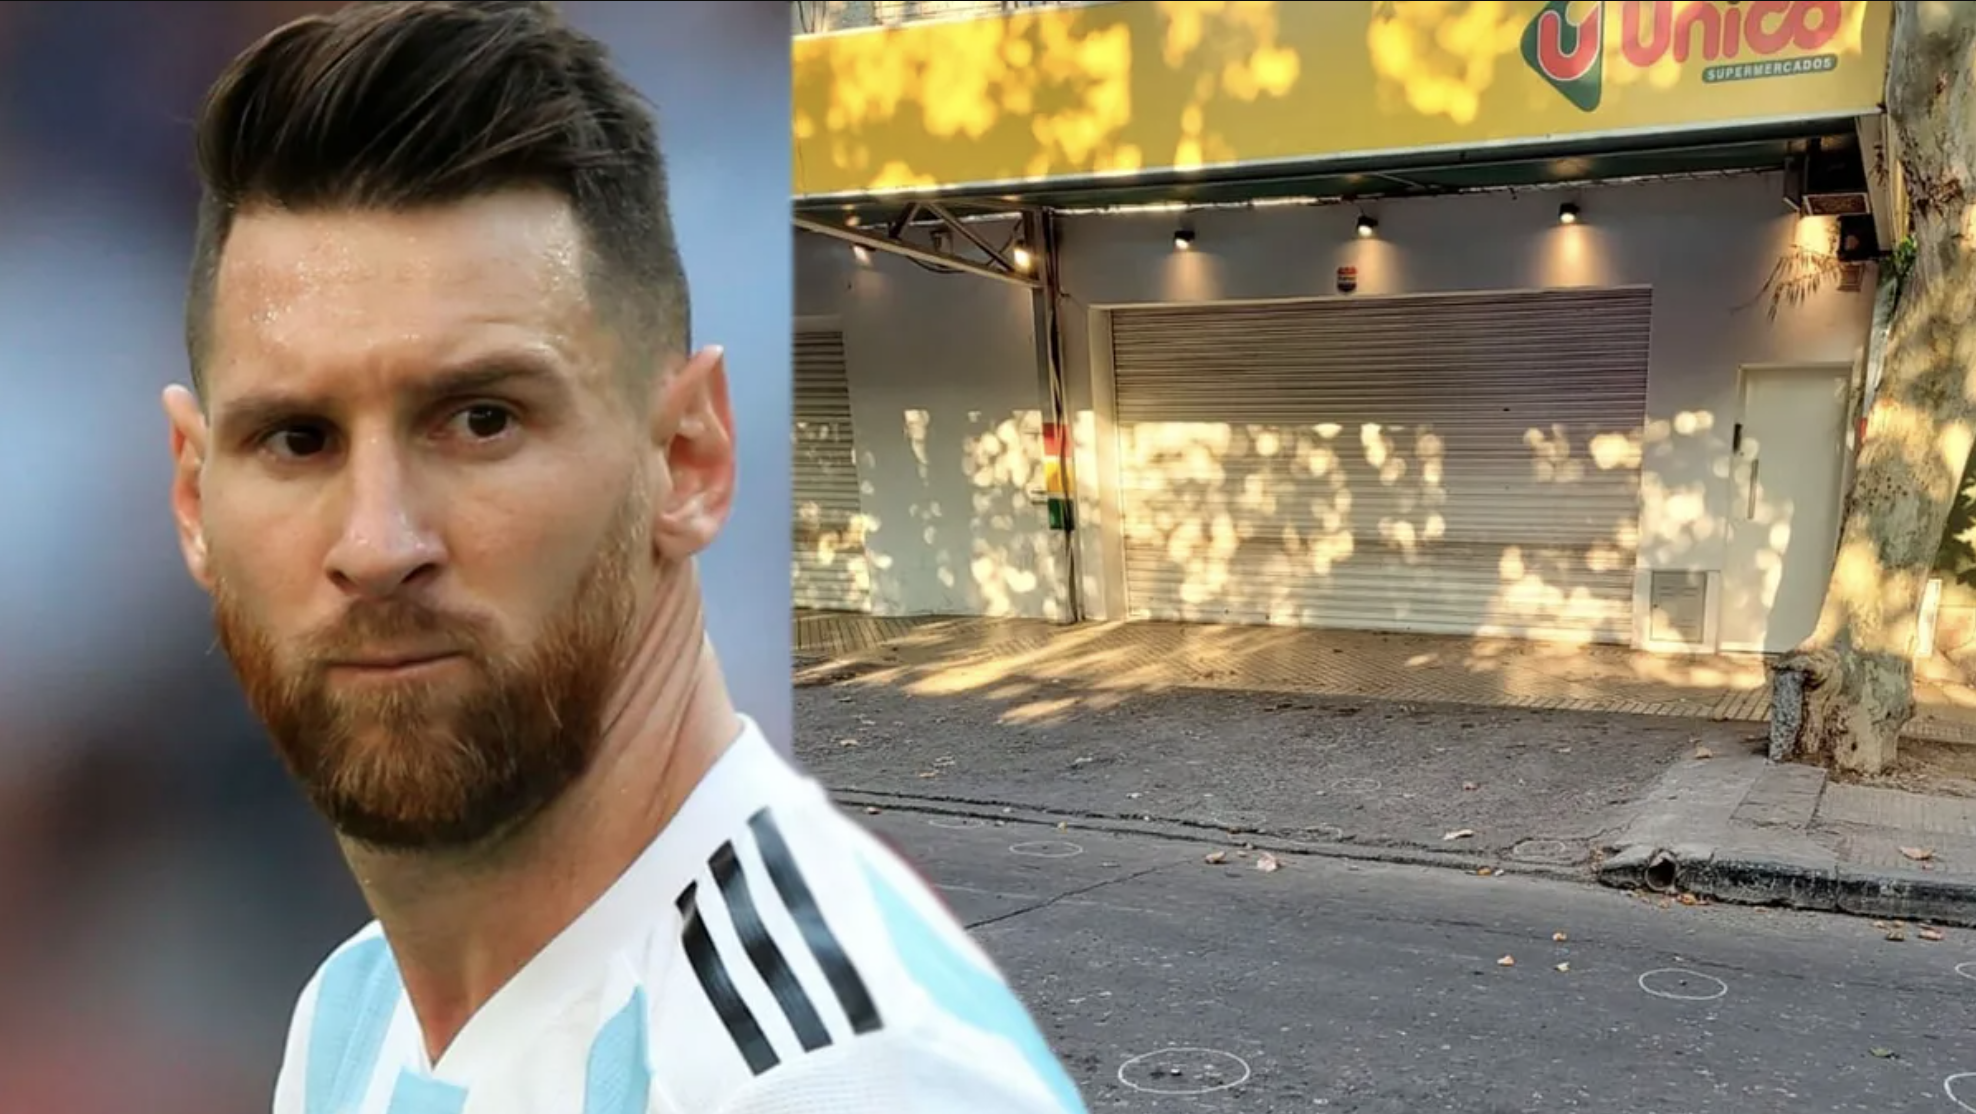 Amenazan a Messi tras ataque a negocio familiar: Gobierno de Argentina responde